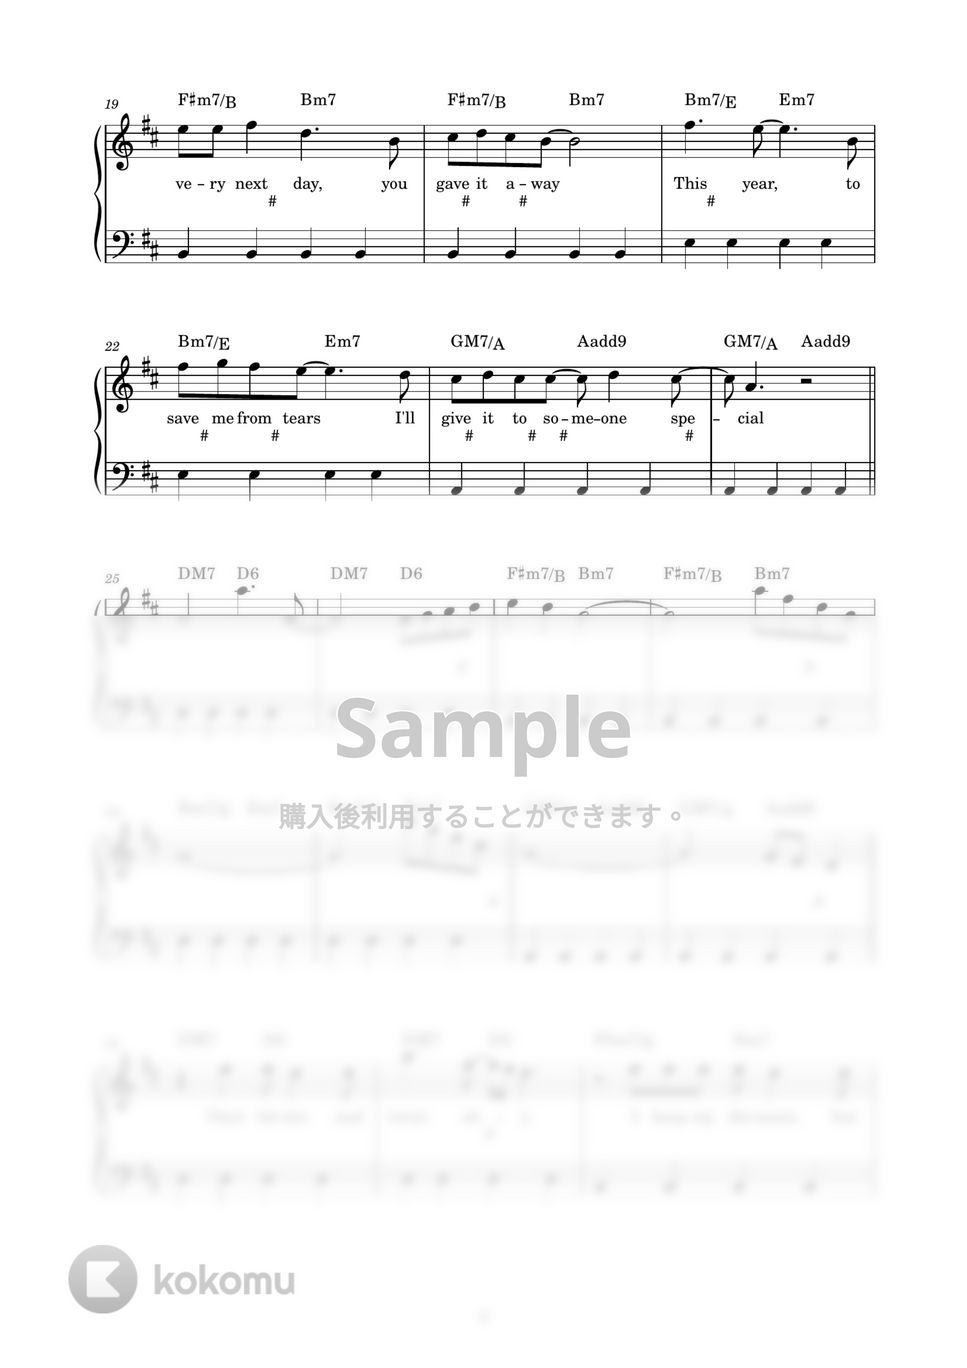 Wham! - Last Christmas (ピアノ楽譜 / かんたん両手 / 歌詞付き / ドレミ付き / 初心者向き) by piano.tokyo